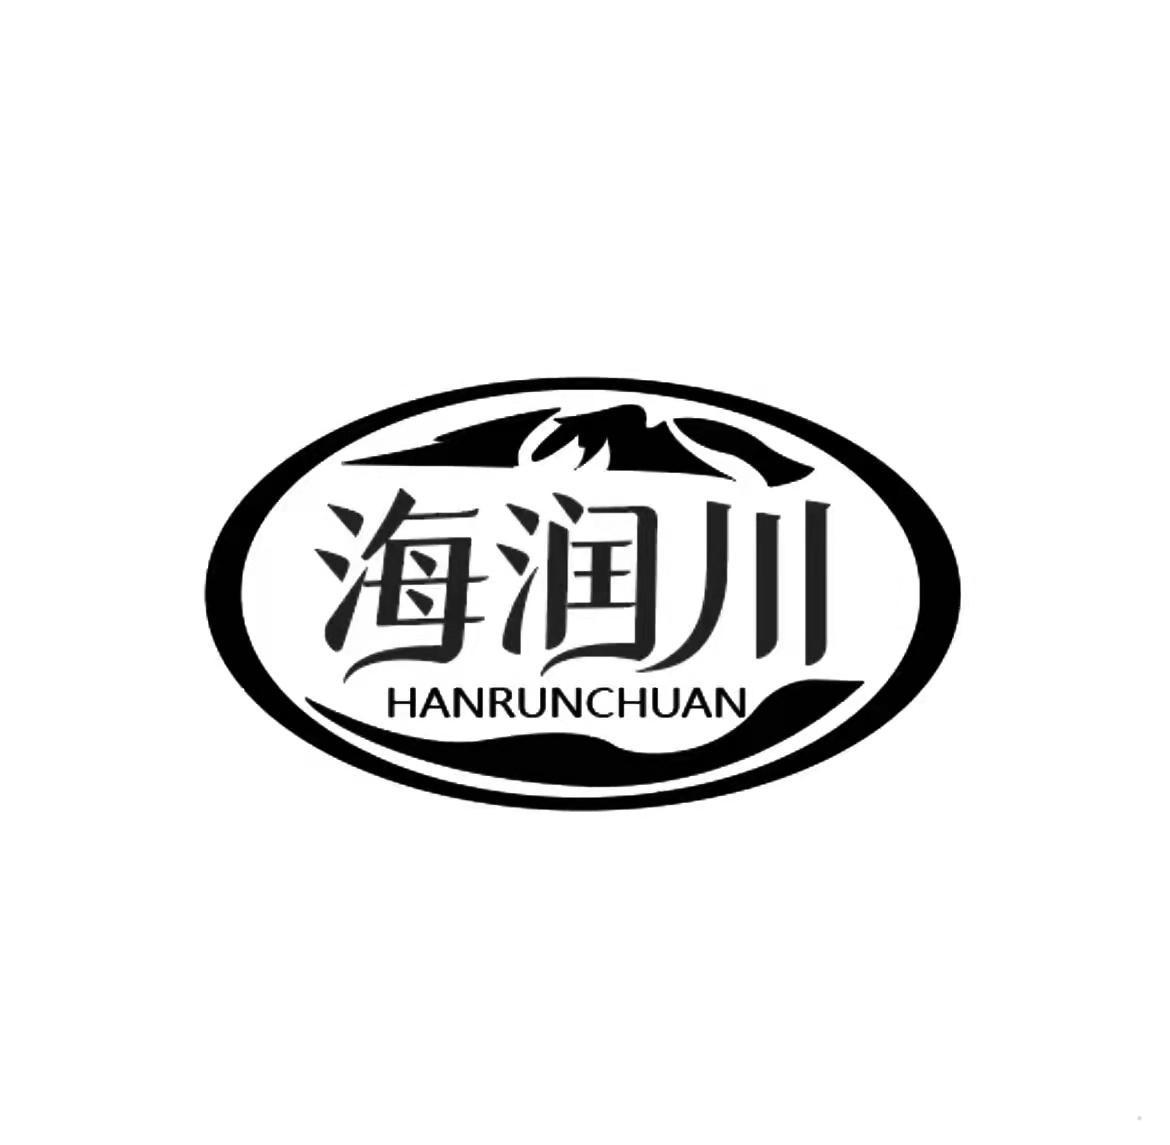 海润川 HANRUNCHUAN